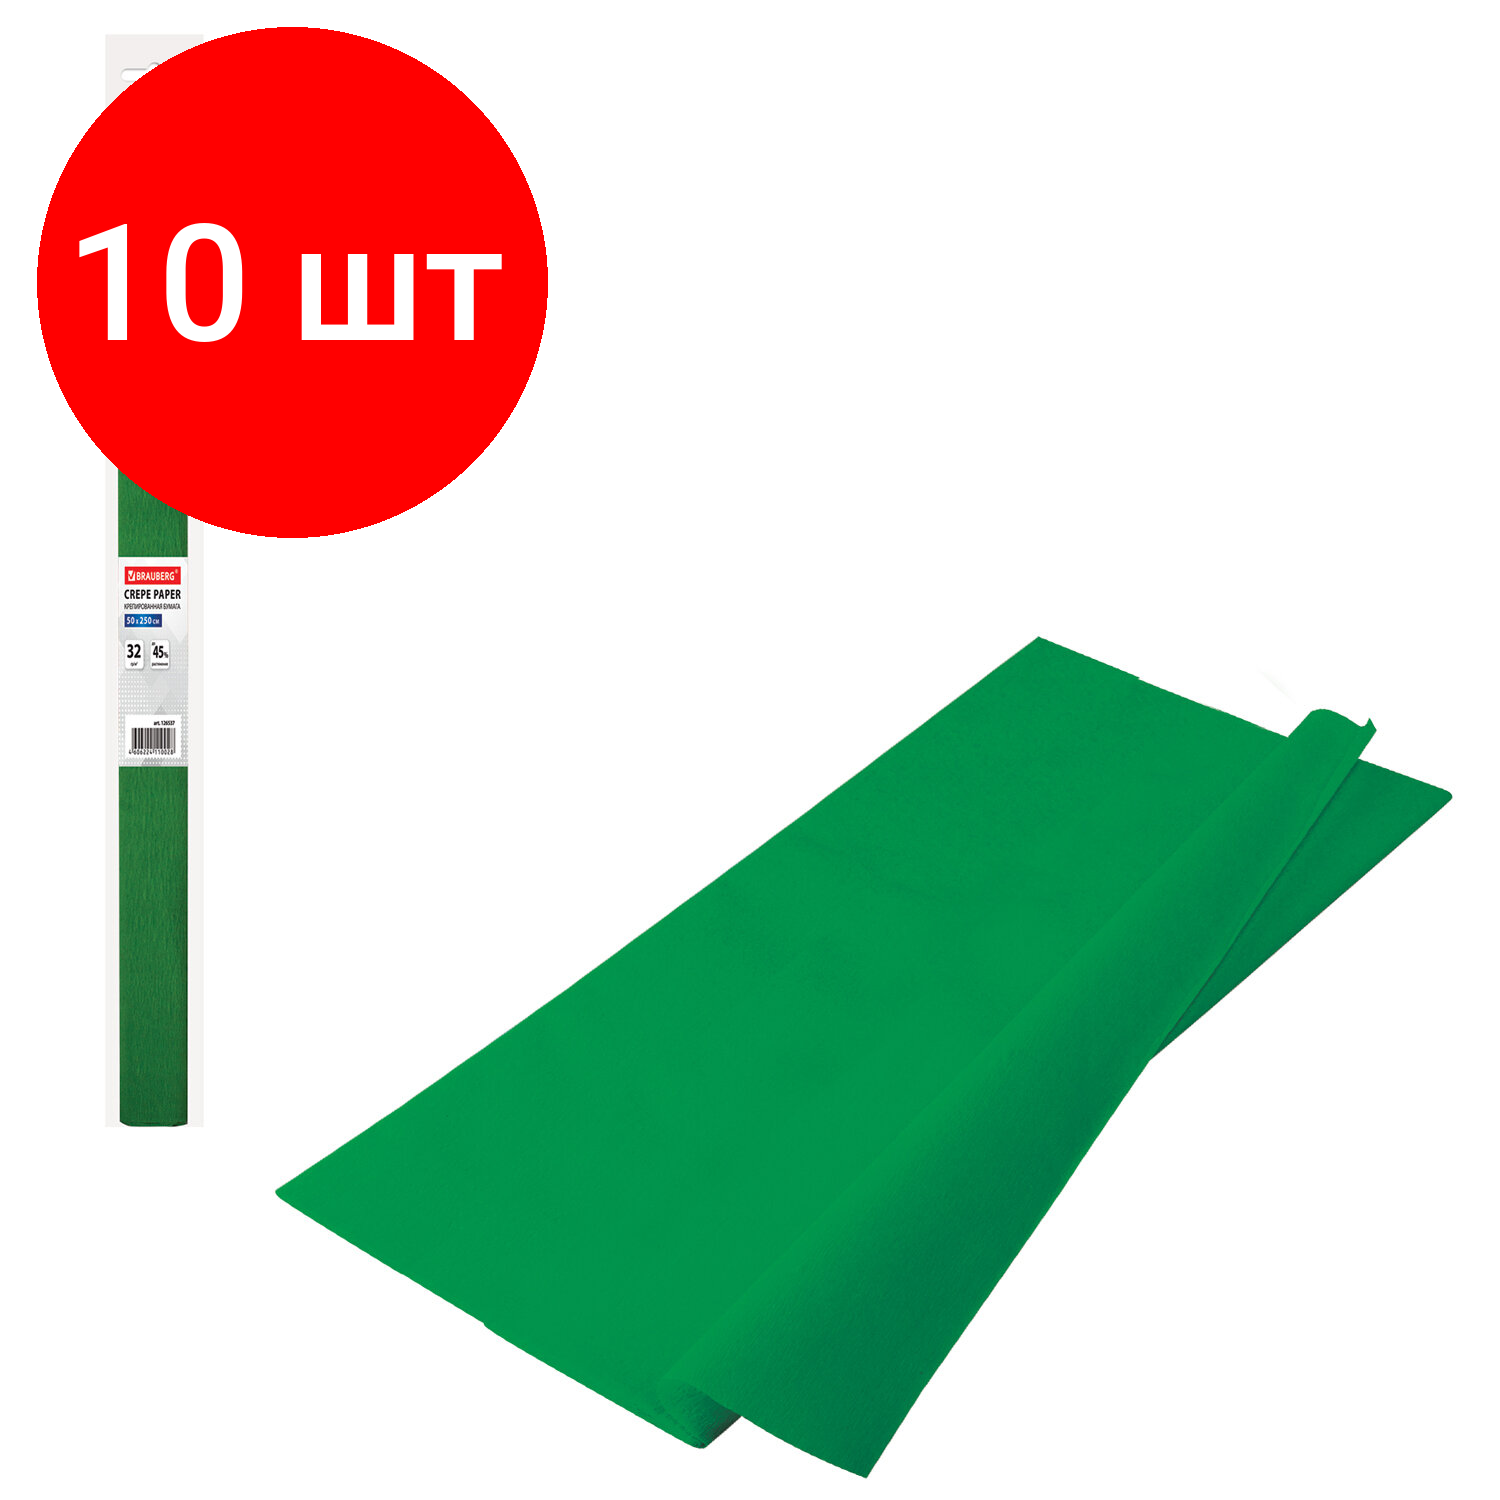 Комплект 10 шт, Бумага гофрированная (креповая) плотная, 32 г/м2, темно-зеленая, 50х250 см, в рулоне, BRAUBERG, 126537